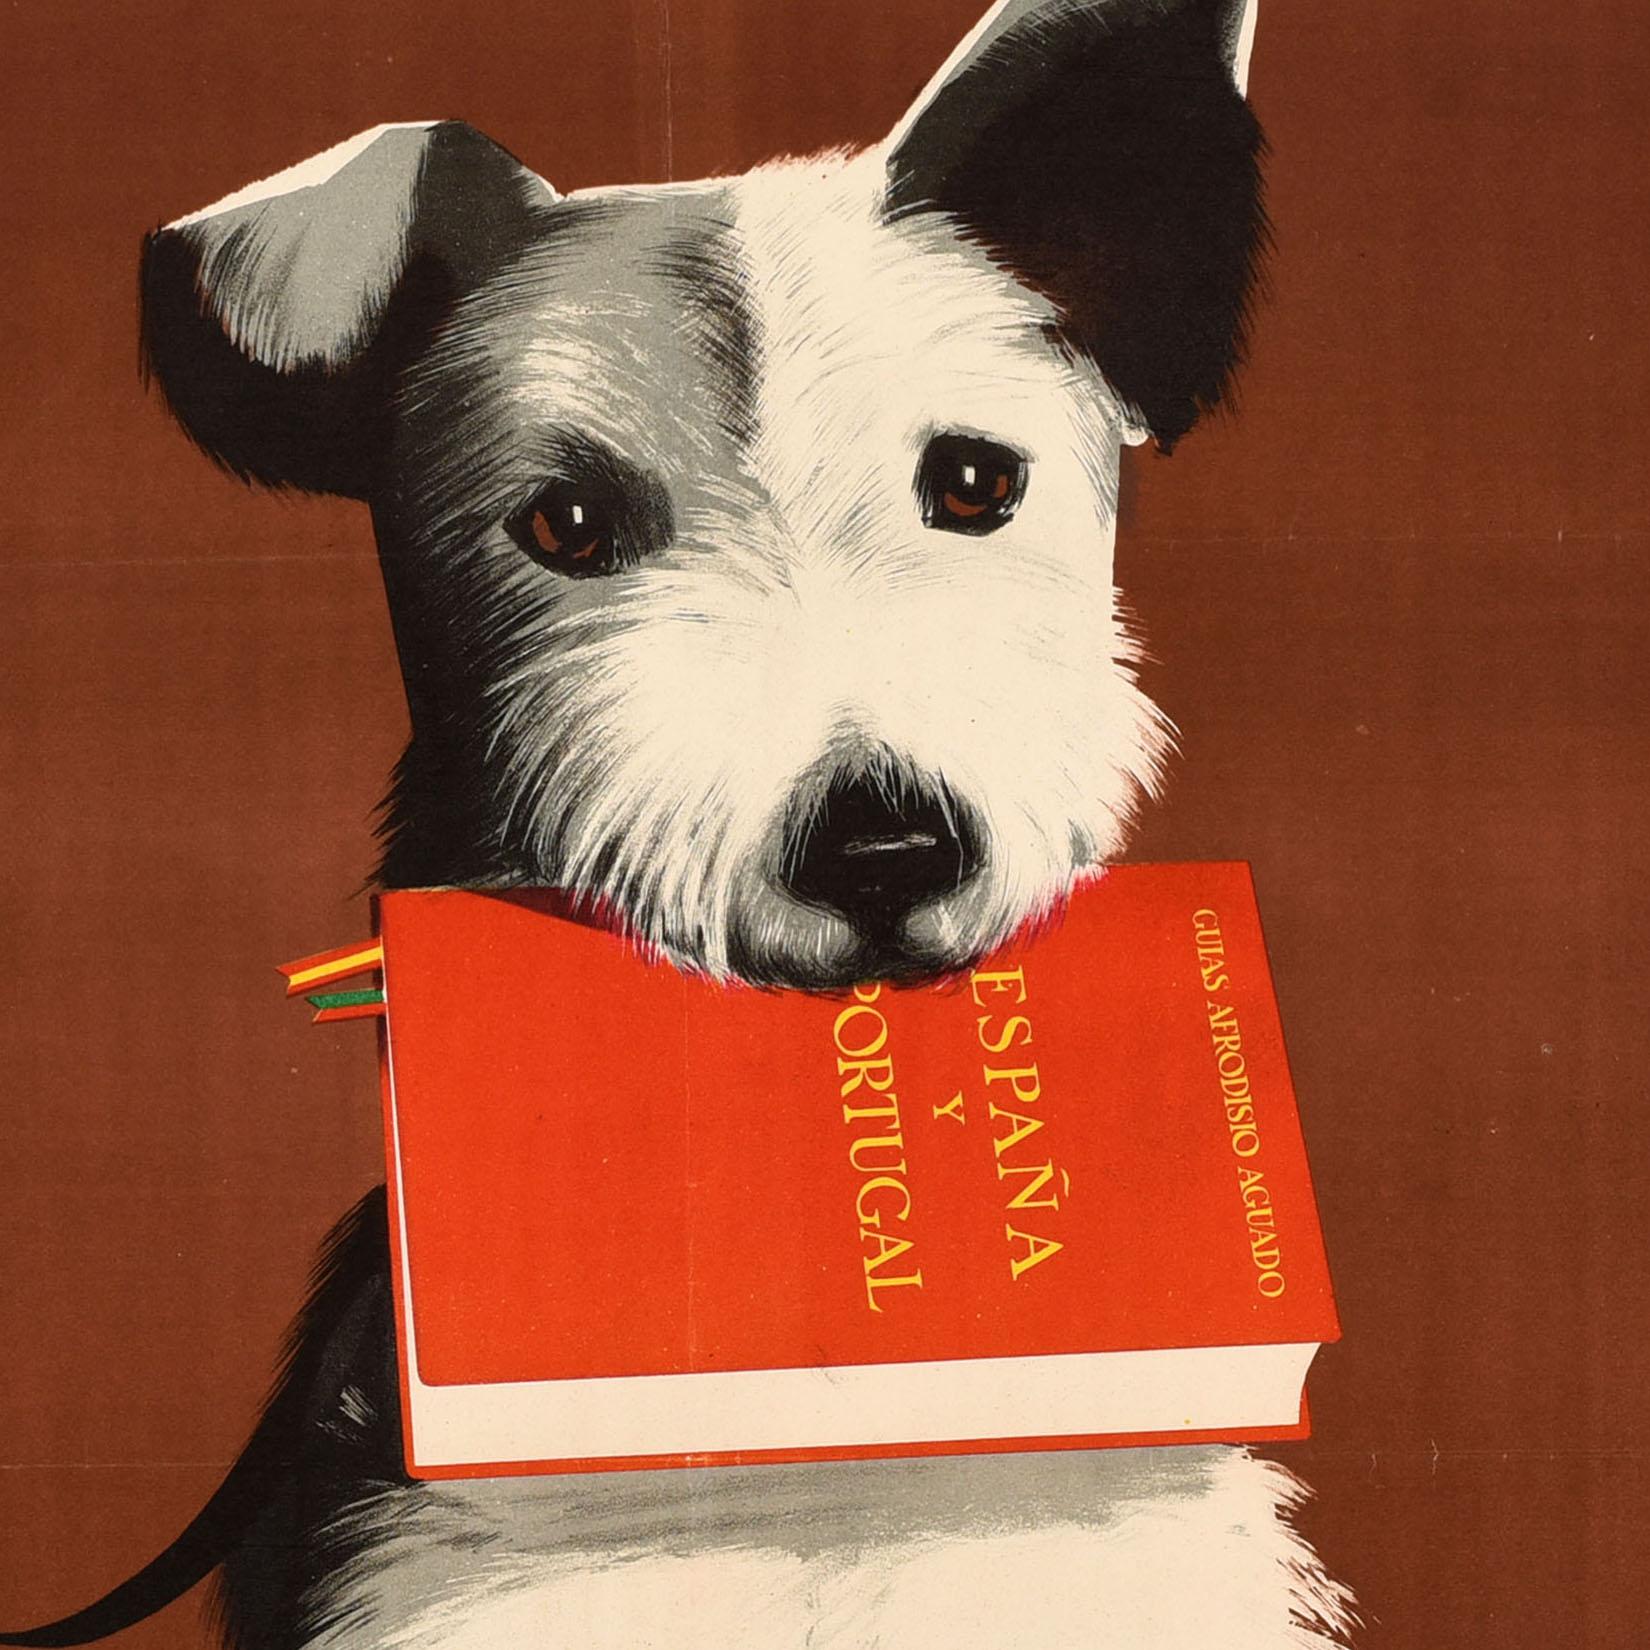 Spanish Original Vintage Advertising Poster Spain Portugal Travel Guide Book Terrier Dog For Sale